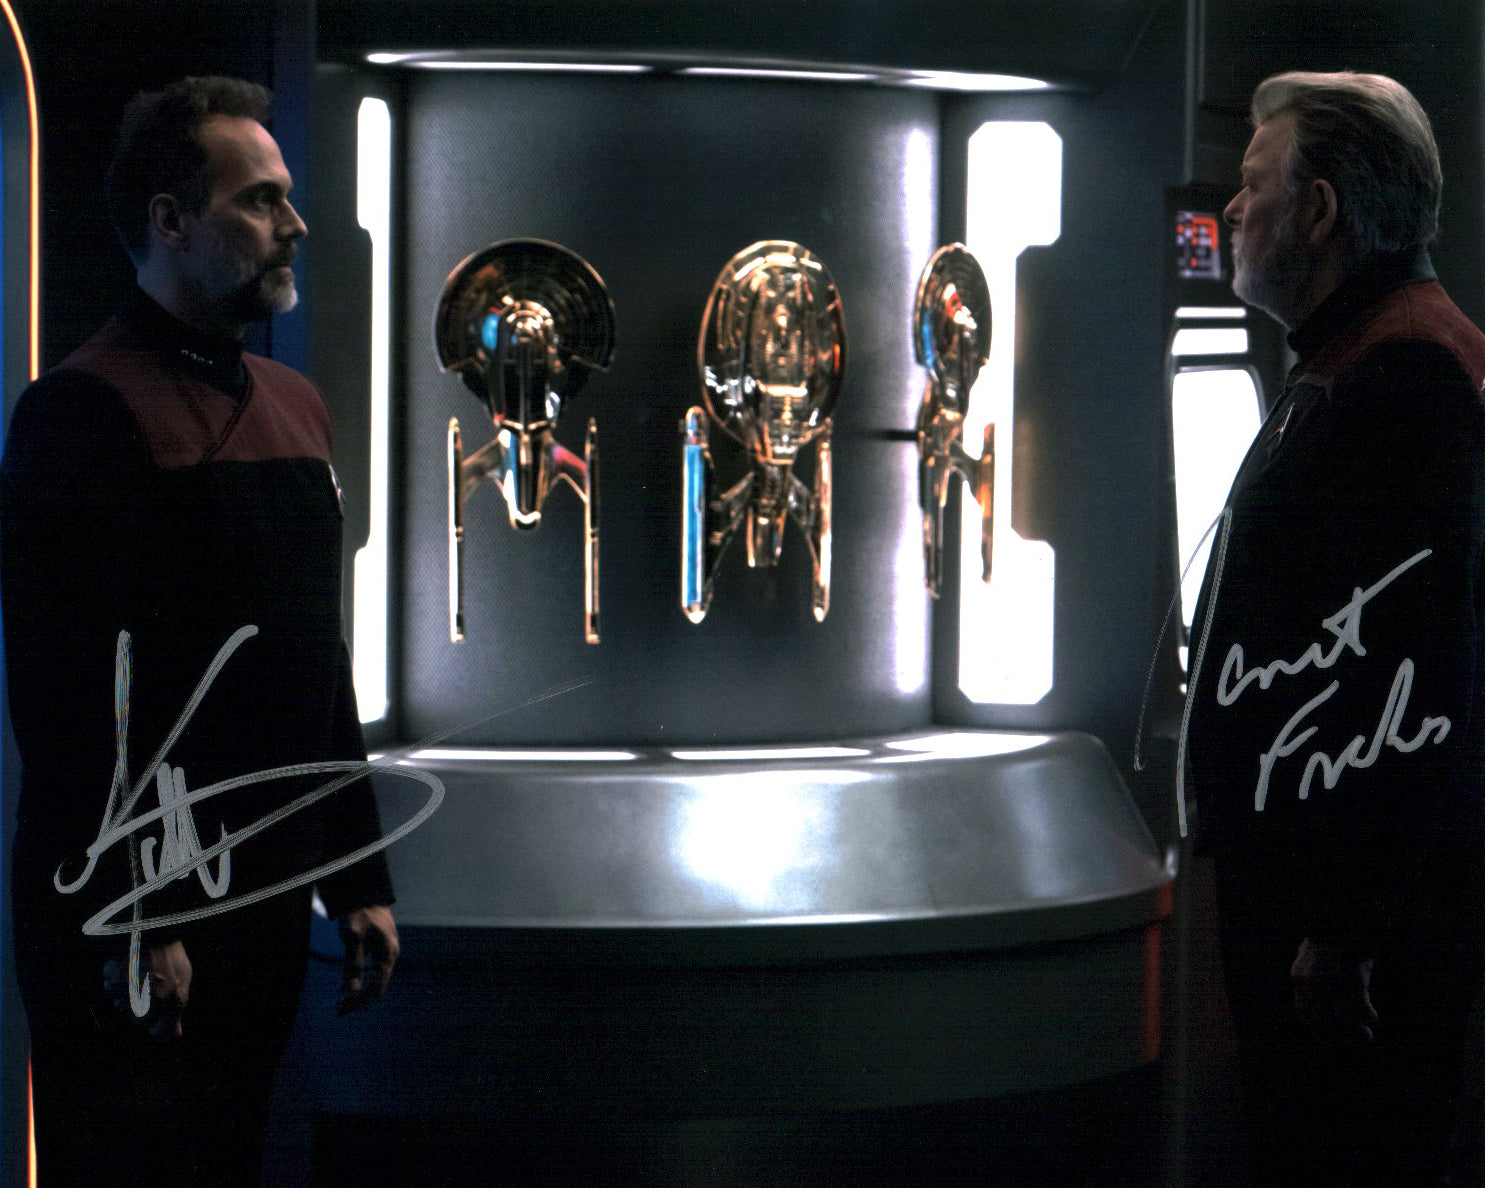 Star Trek Picard 8x10 Photo Cast x2 Signed Jonathan Frakes, Todd Stashwick JSA Certified Autograph